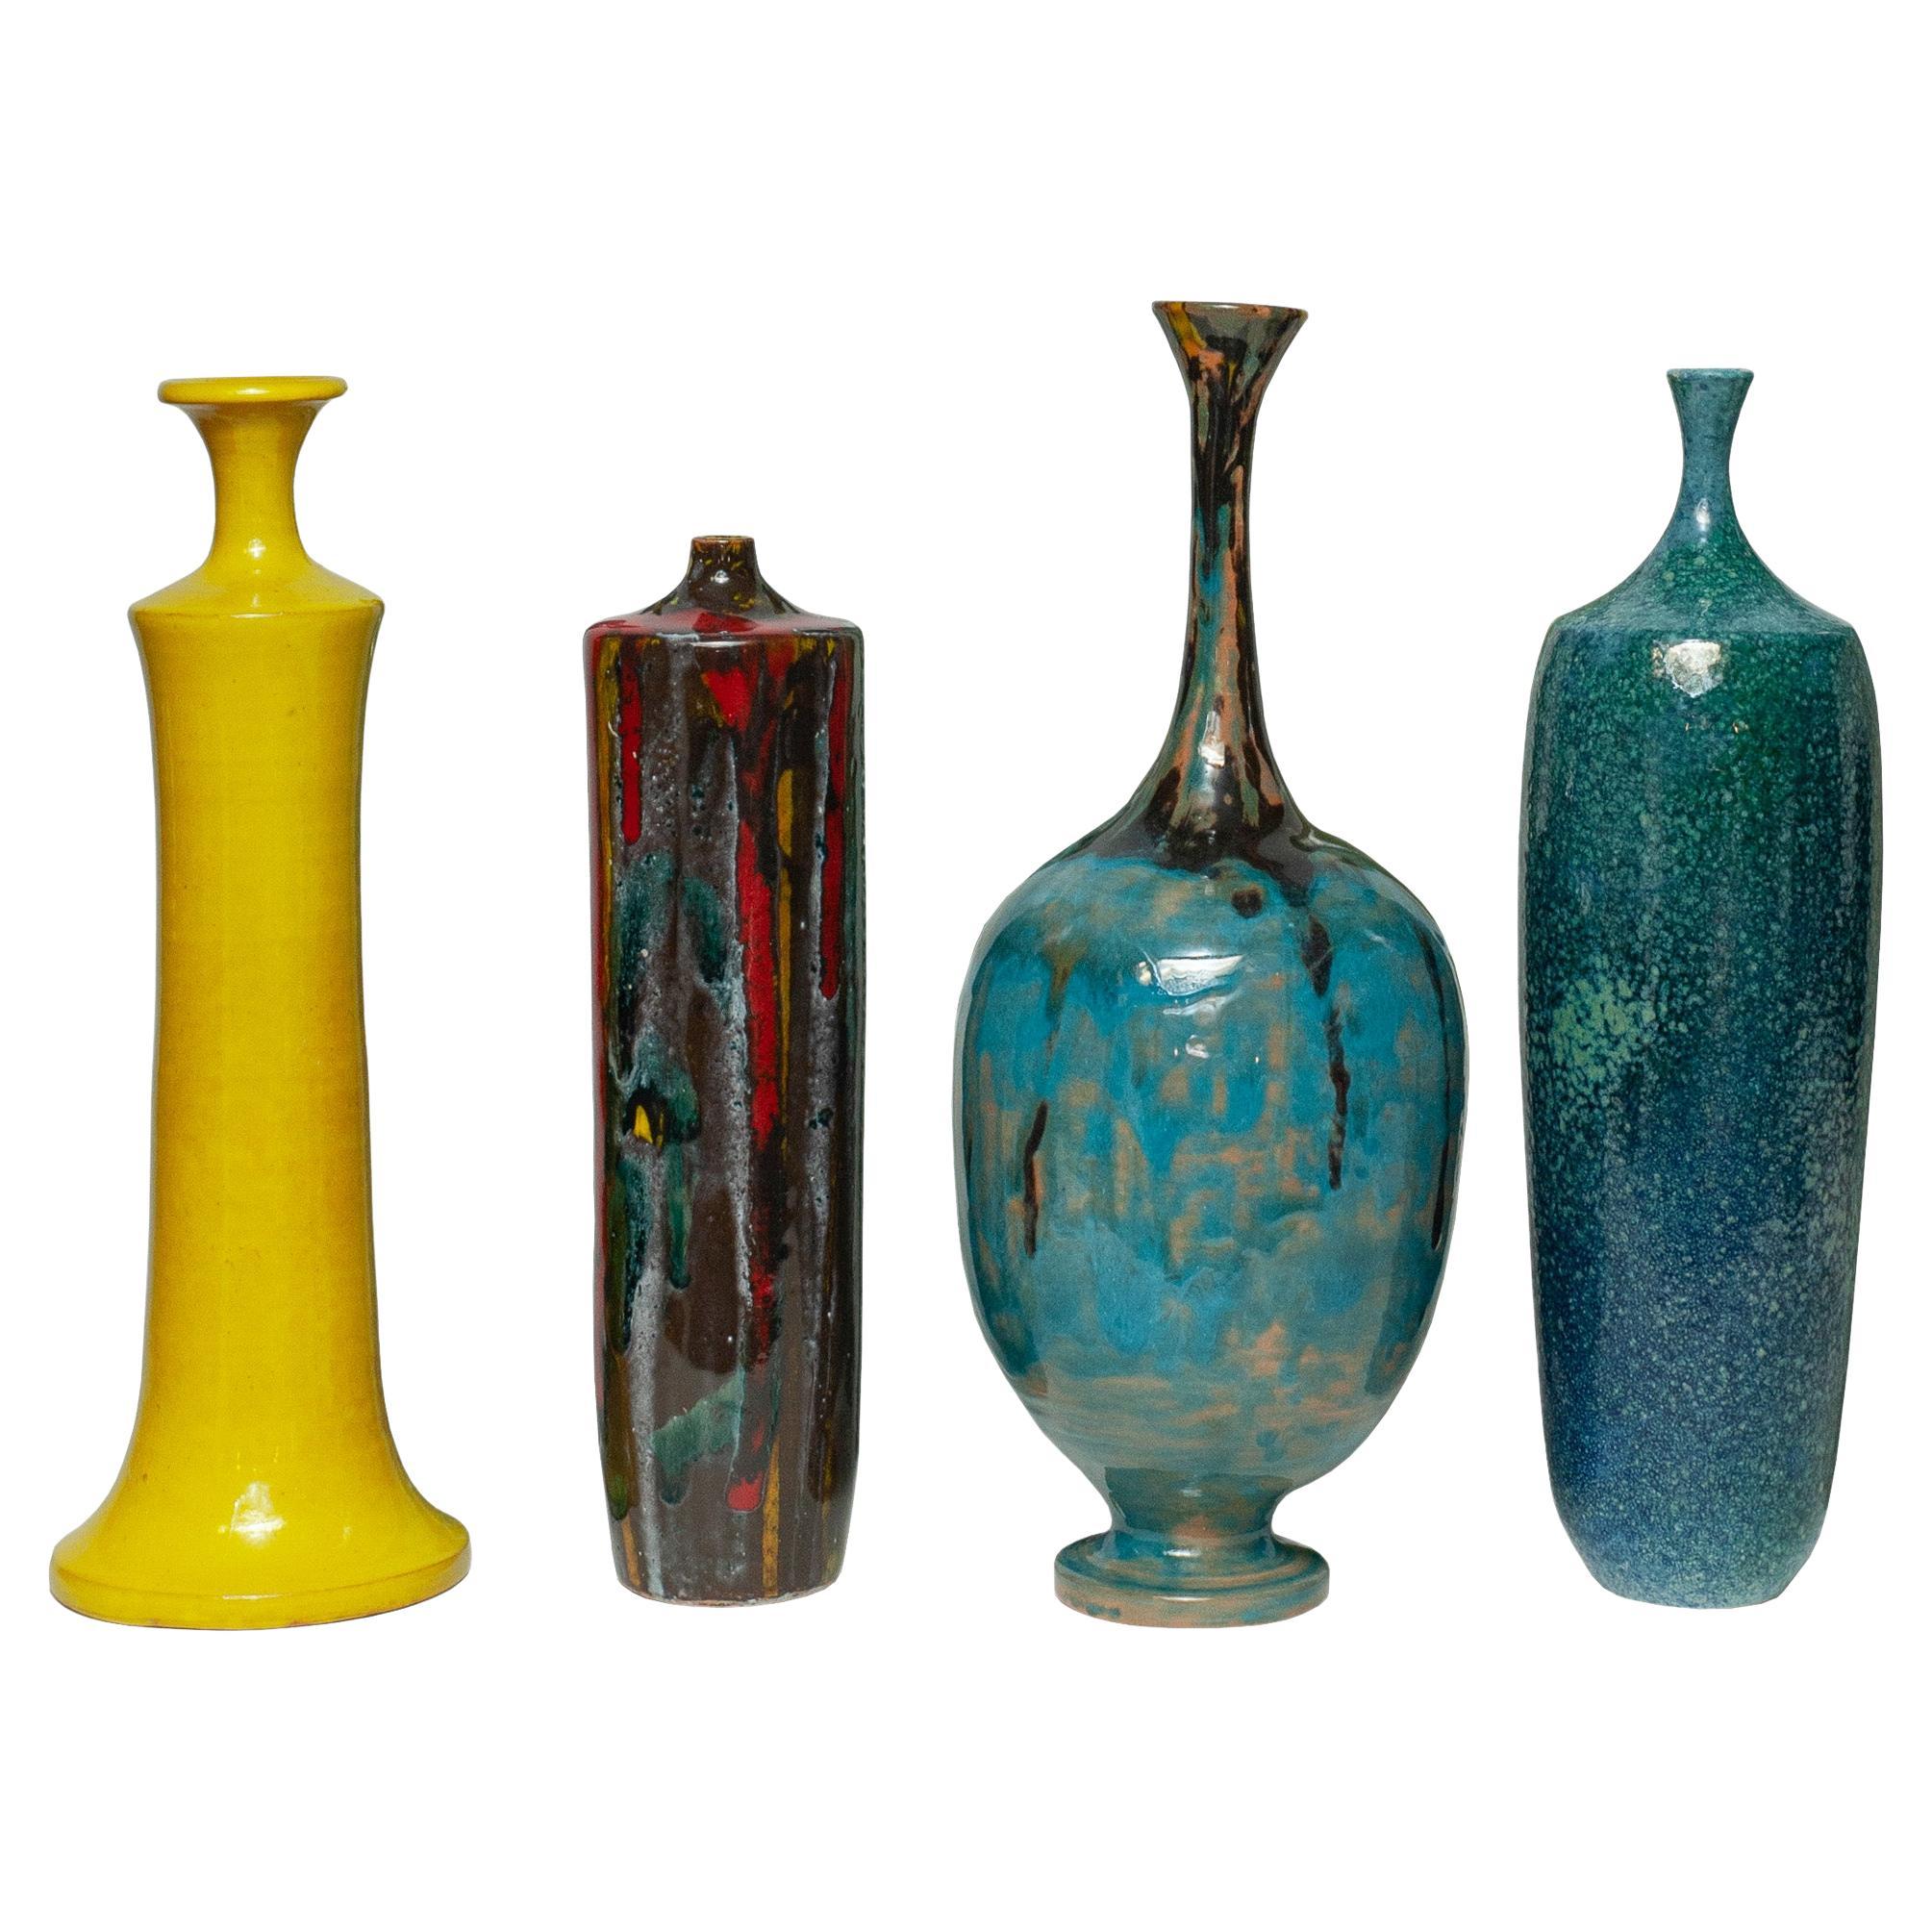 Contemporary Set of 4 Italian Mid Century-Inspired Glazed Ceramic Vases  For Sale